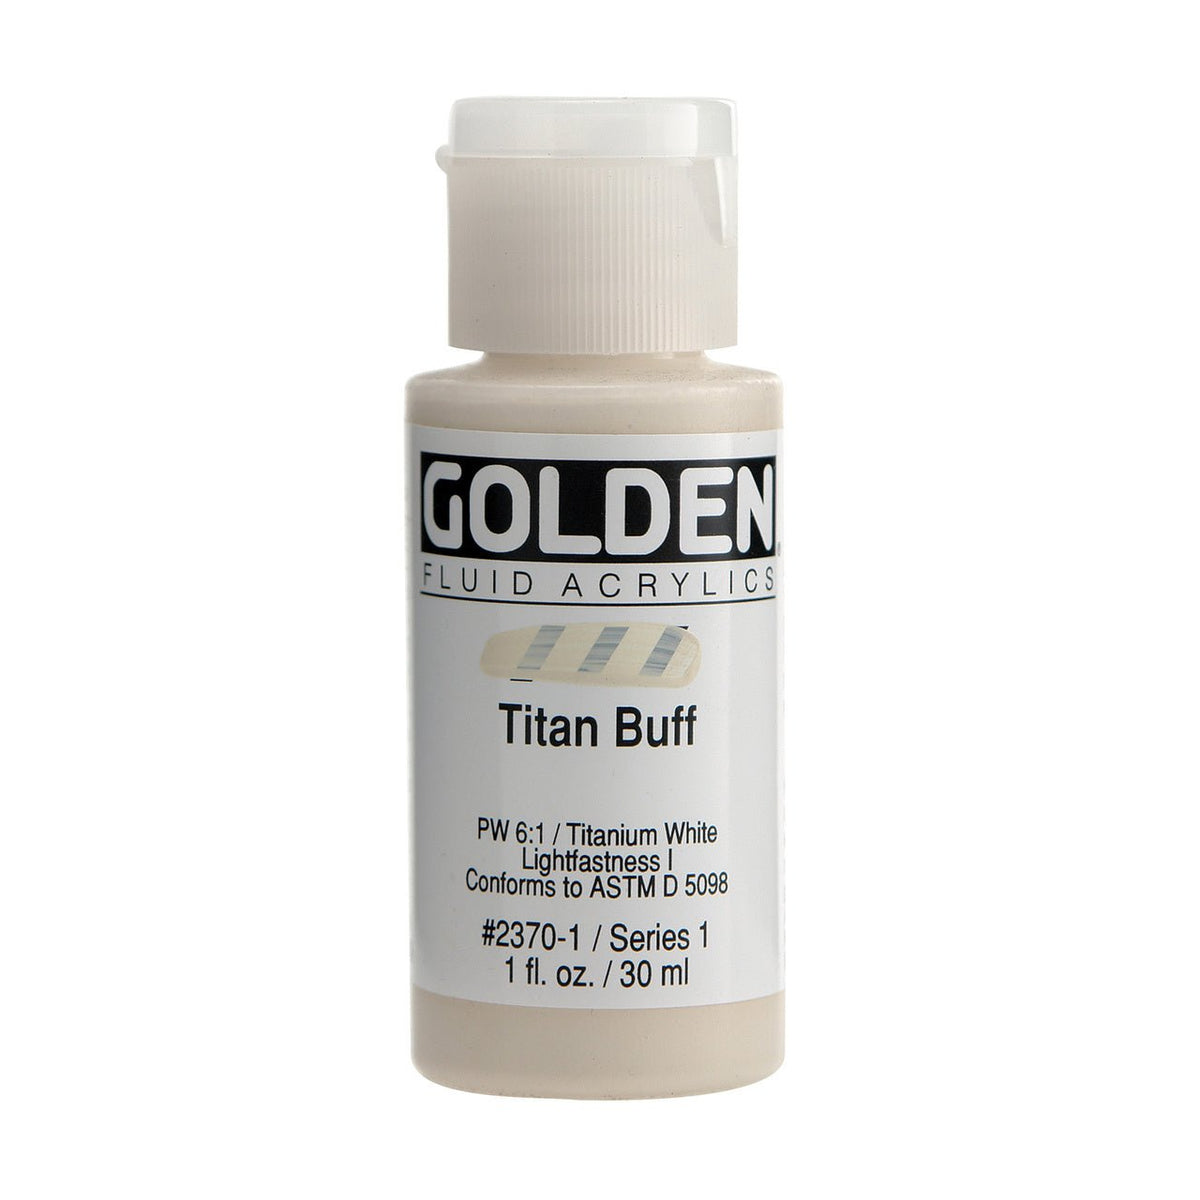 Golden Fluid Acrylic Titan Buff 1 oz - merriartist.com